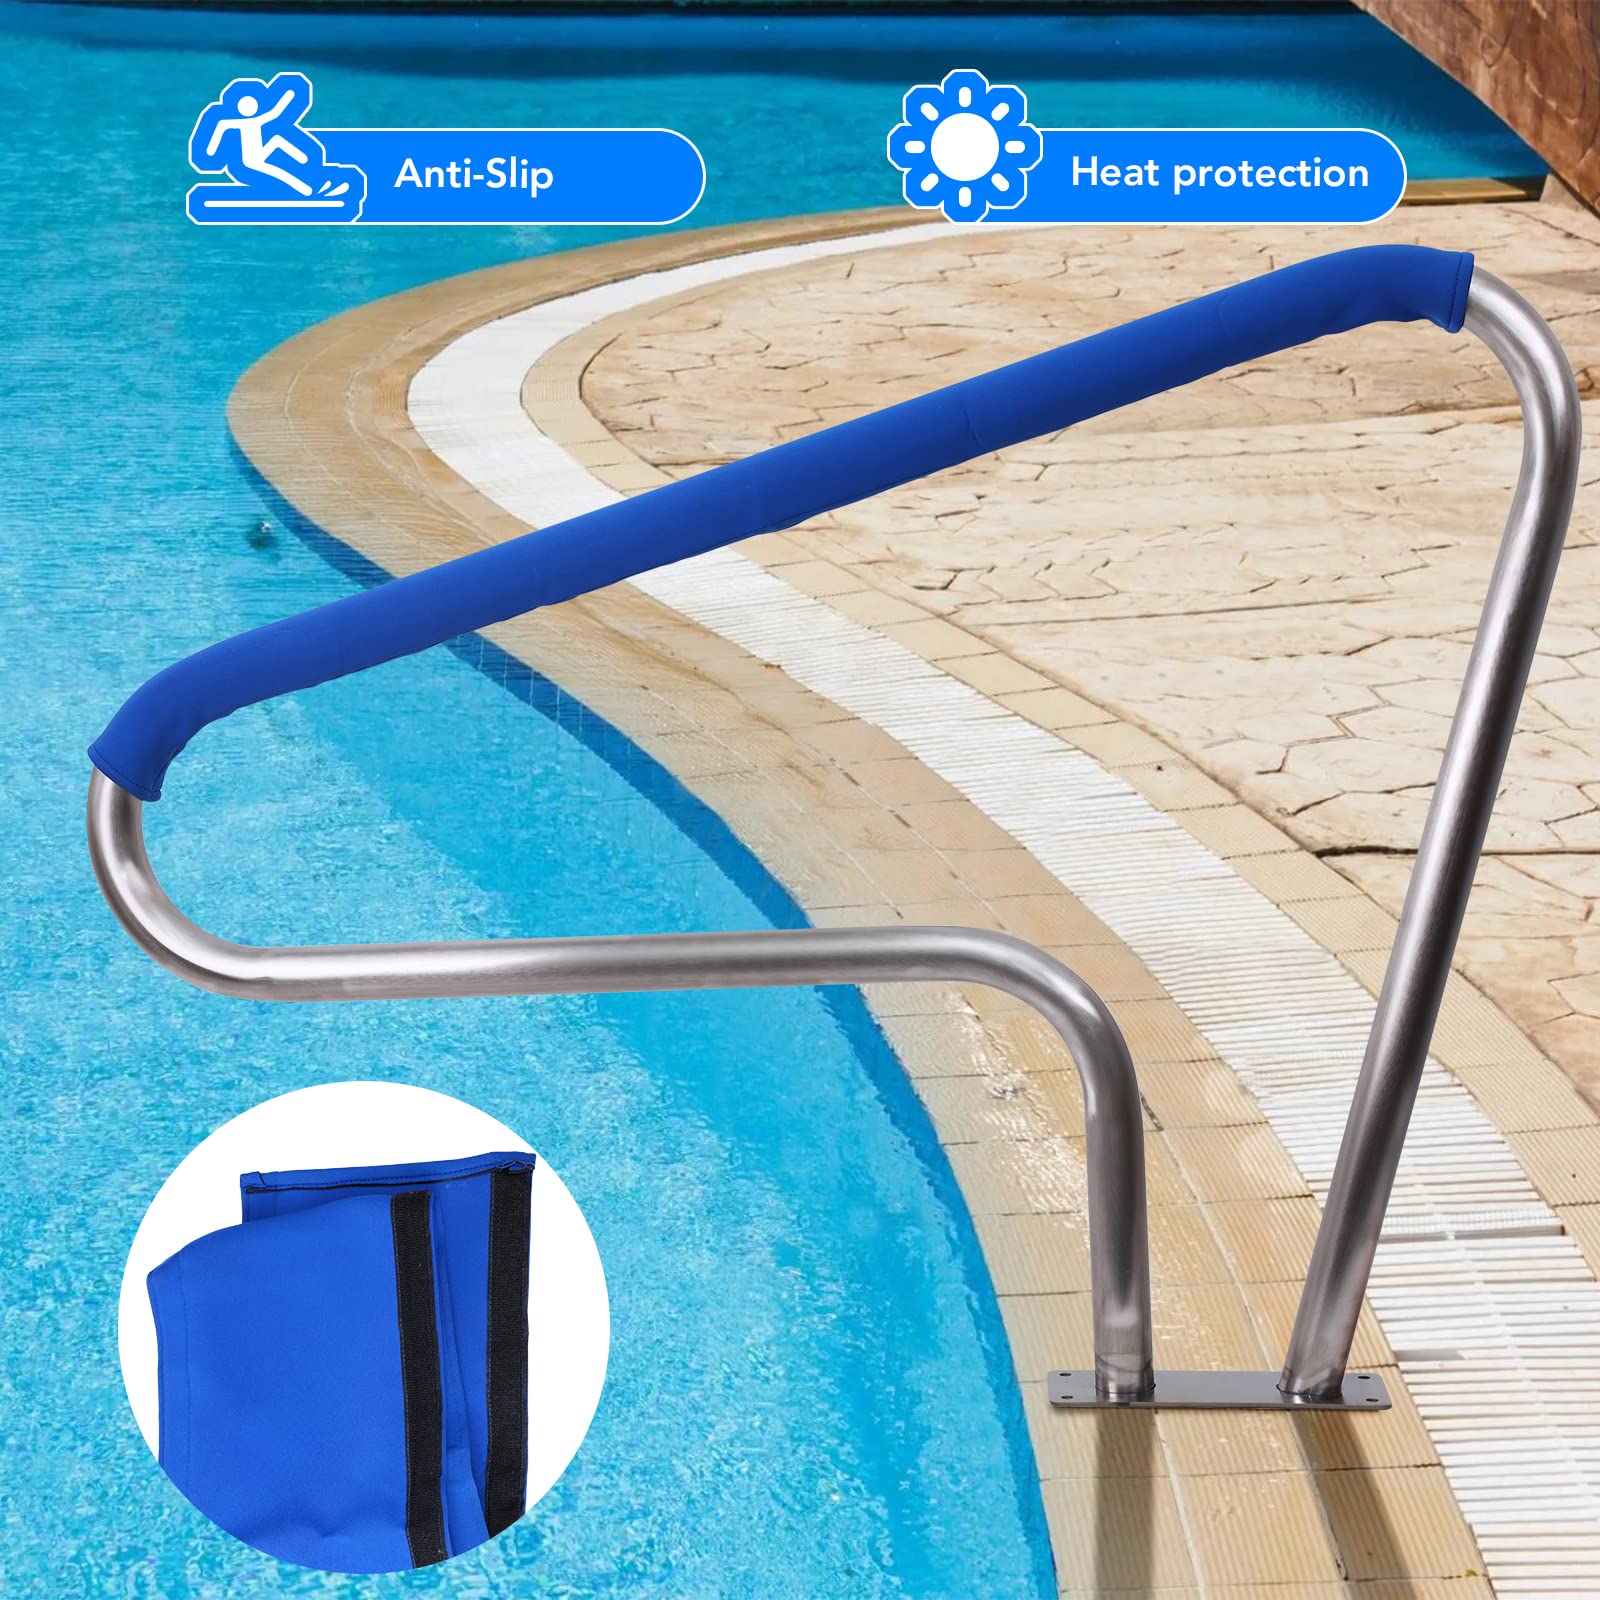 GARVEE Pool Handrail 48x36 Inch Swimming Pool Stair Rail 250LBS Load for Inground Pool